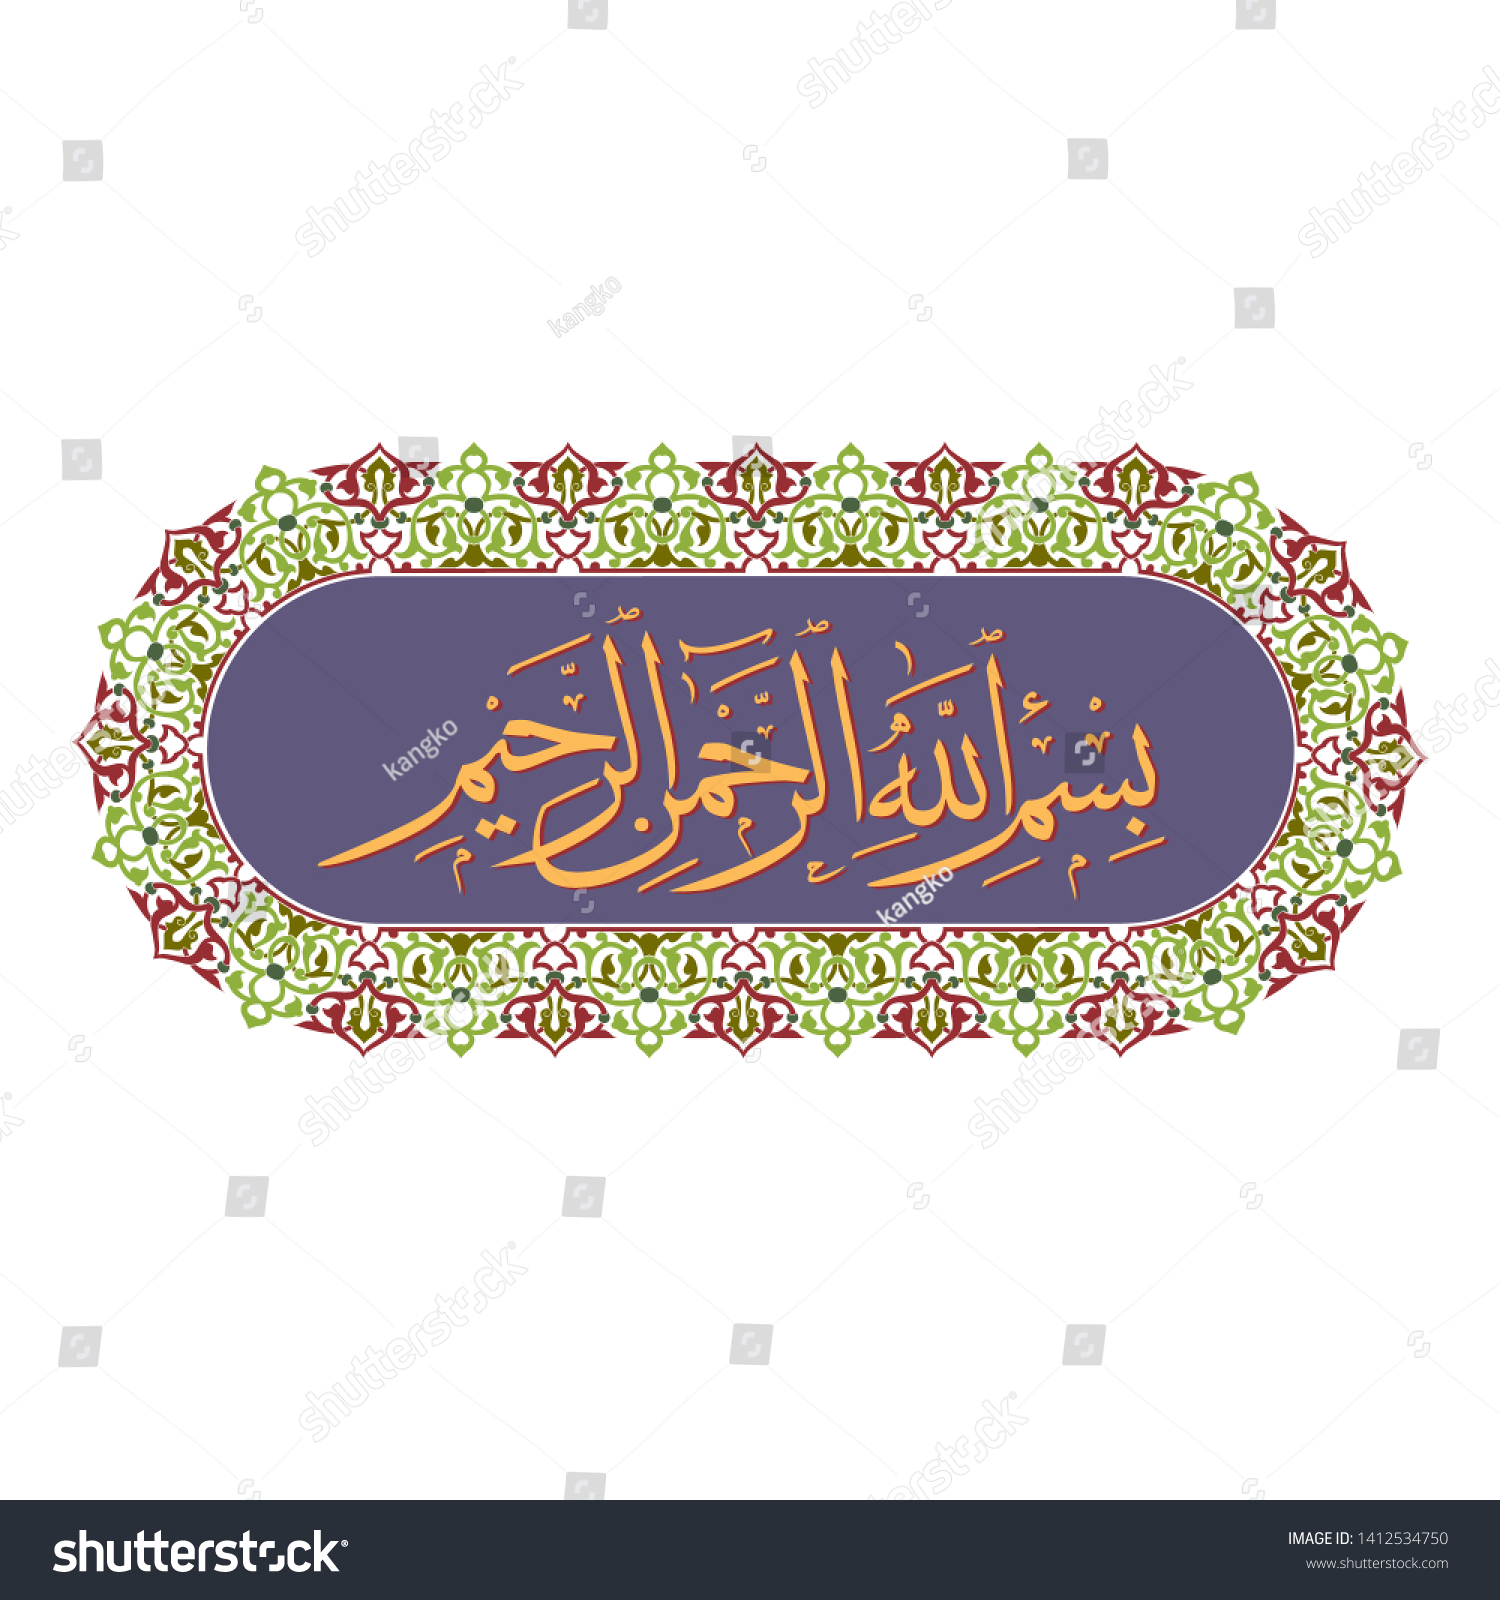 Bismillah Cool Vector Islamic Calligraphy Stock Vector (Royalty Free ...